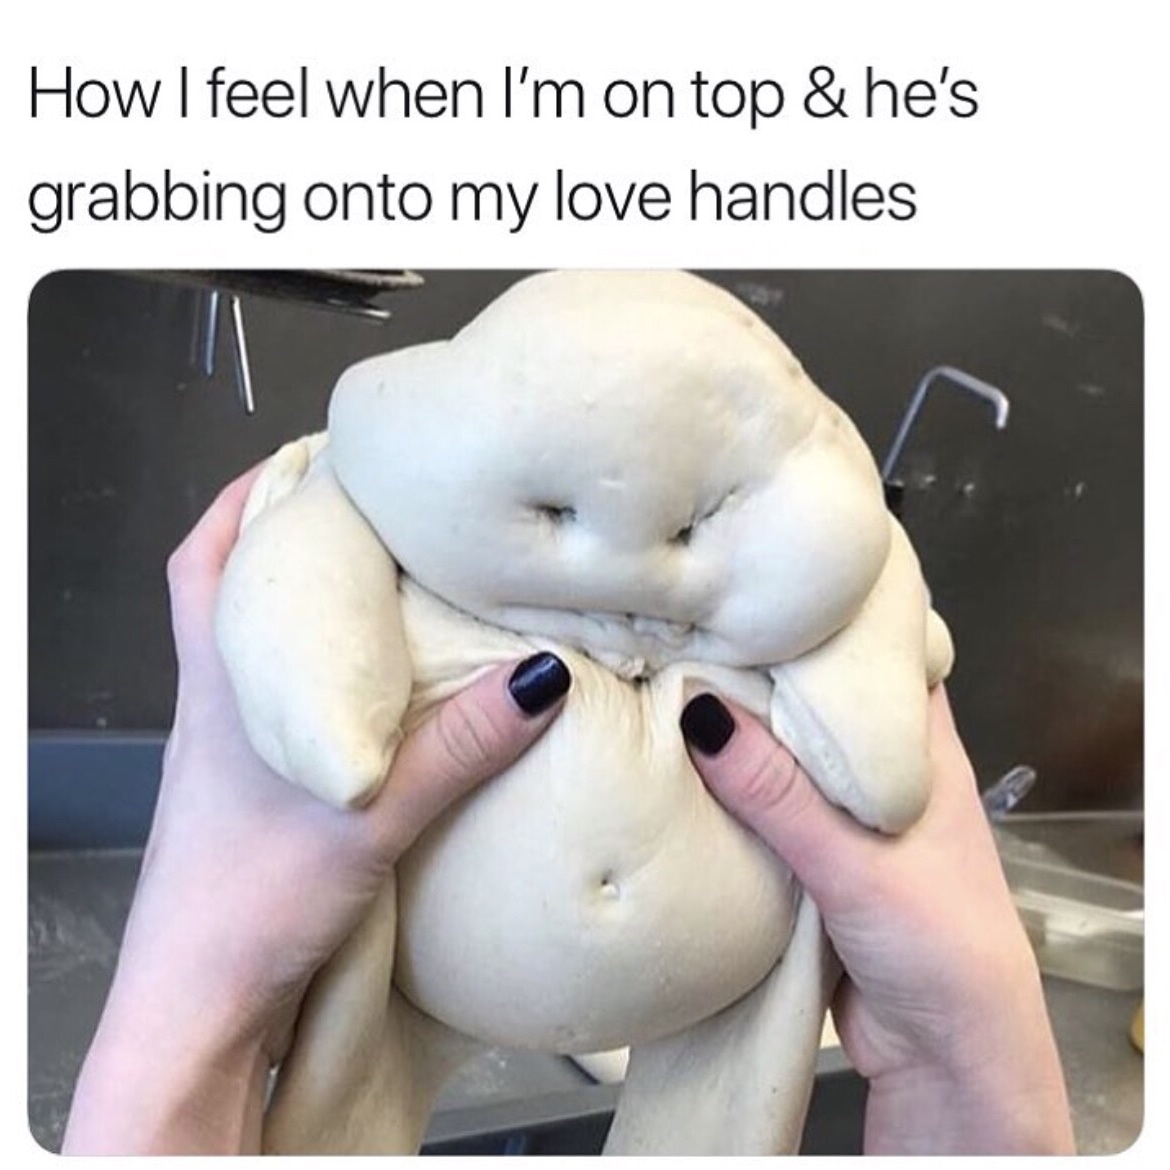 pillsbury doughboy meme - How I feel when I'm on top & he's grabbing onto my love handles